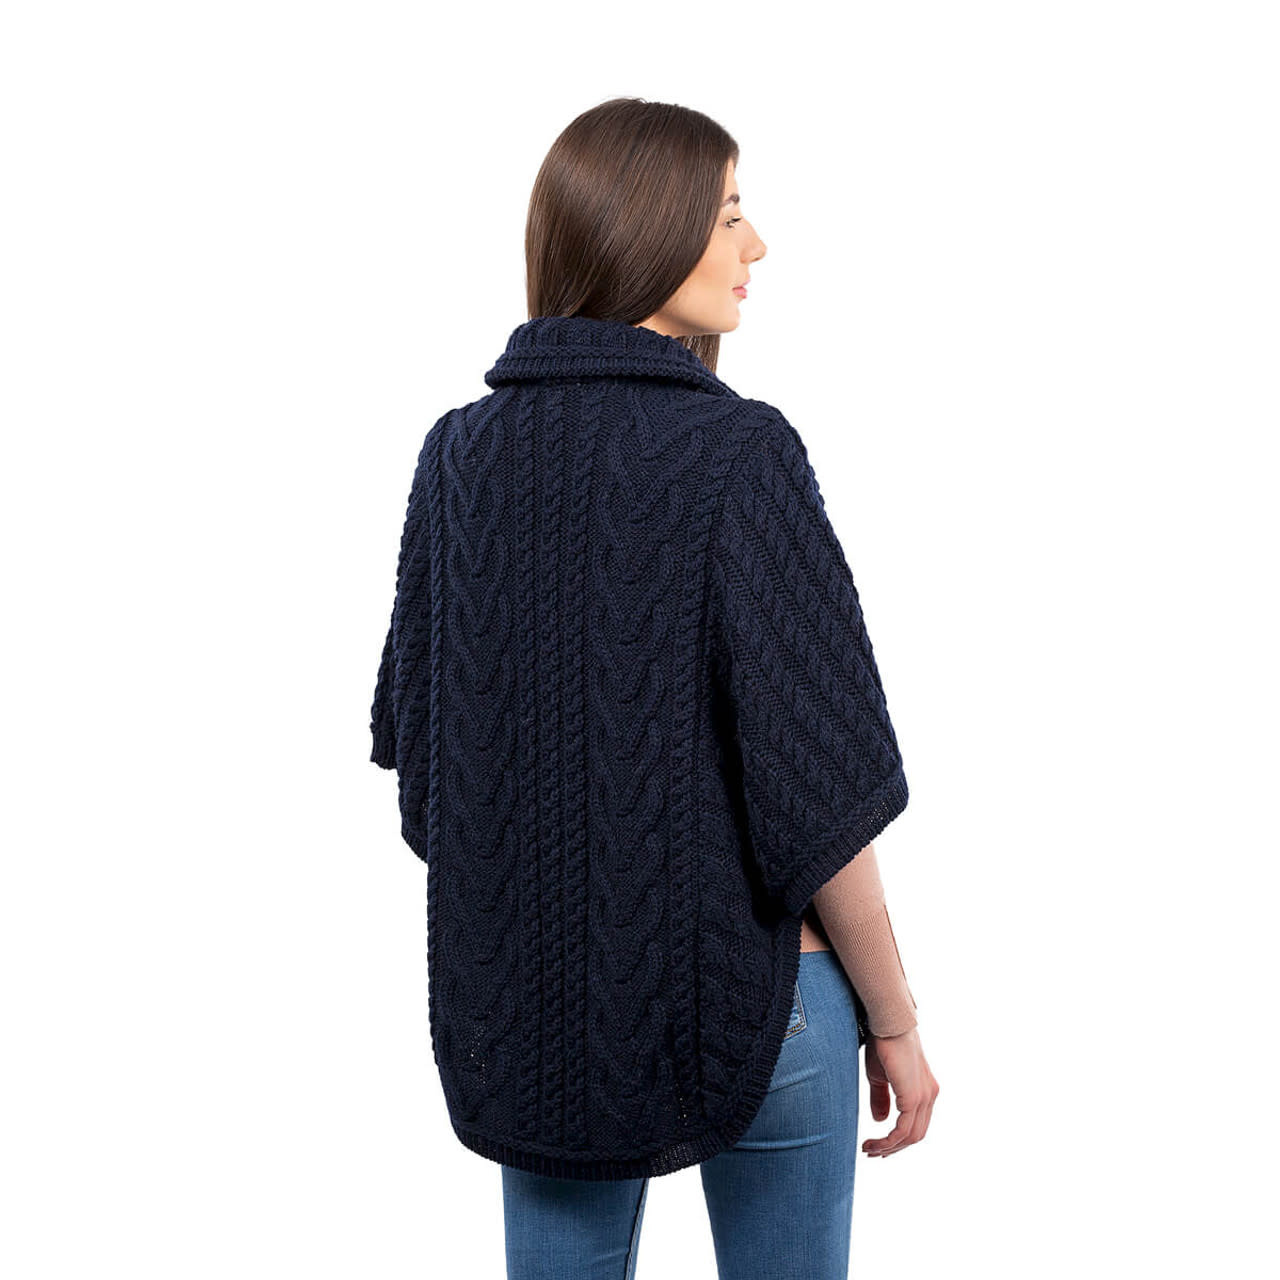 Saol Women's Cable Knit Merino Wool Poncho Sweater